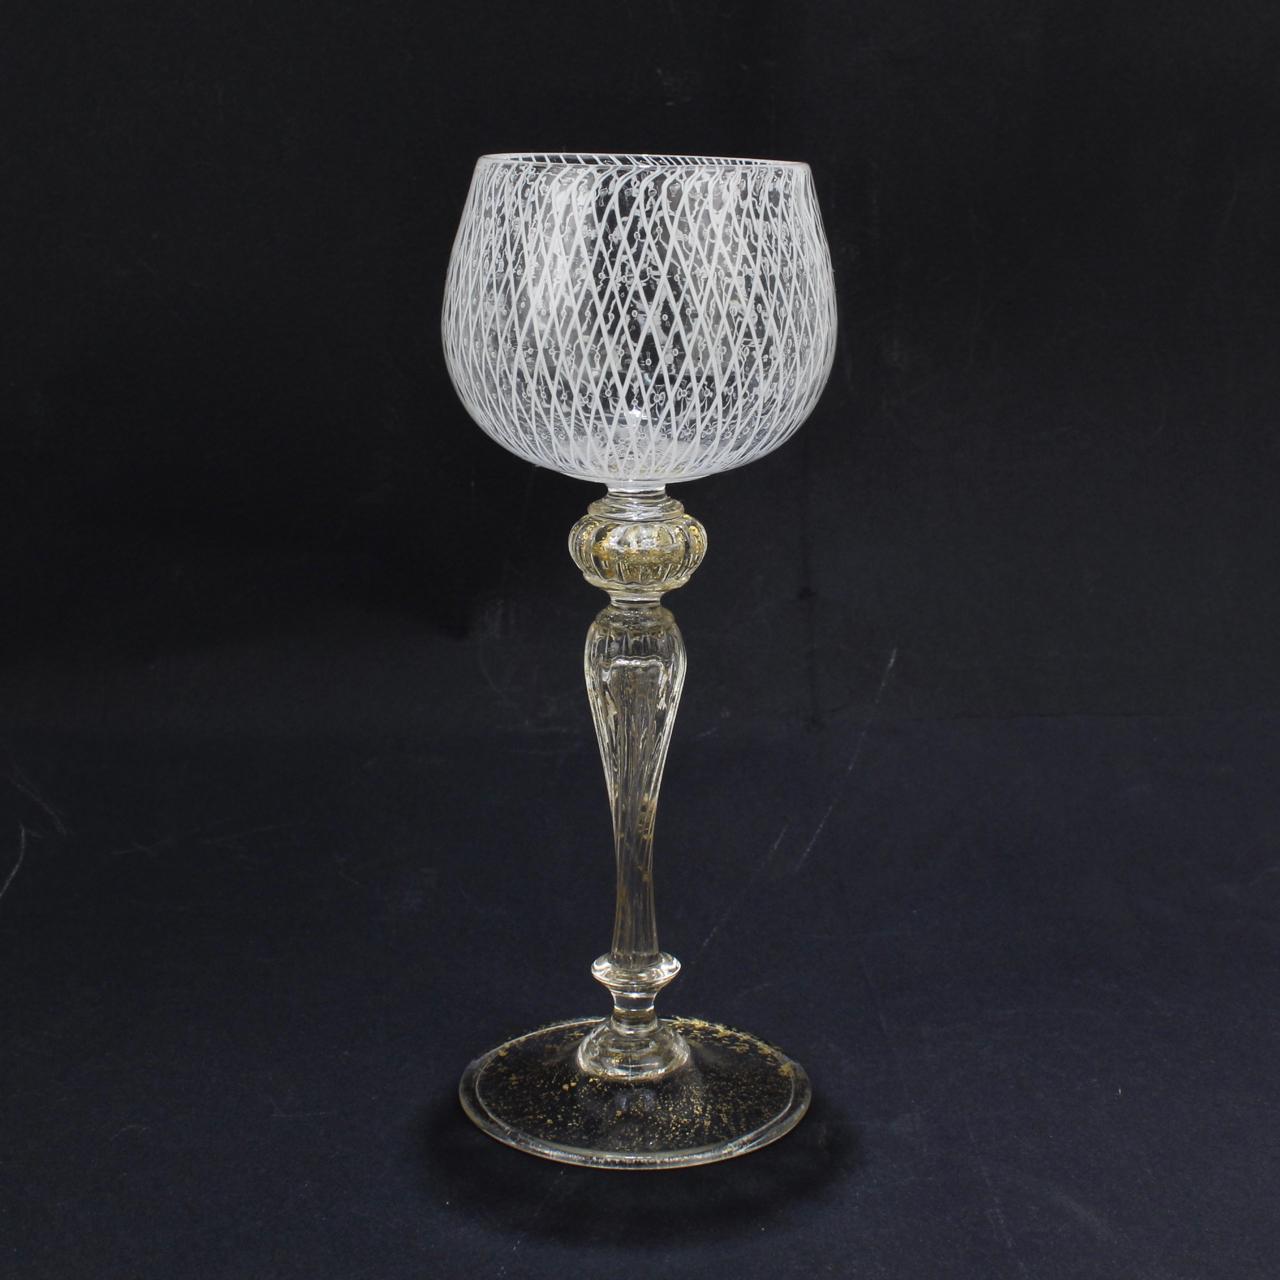 Italian Set of 10 Venetian or Murano Glass Reticulo Filigrana Decorated Wine Glasses